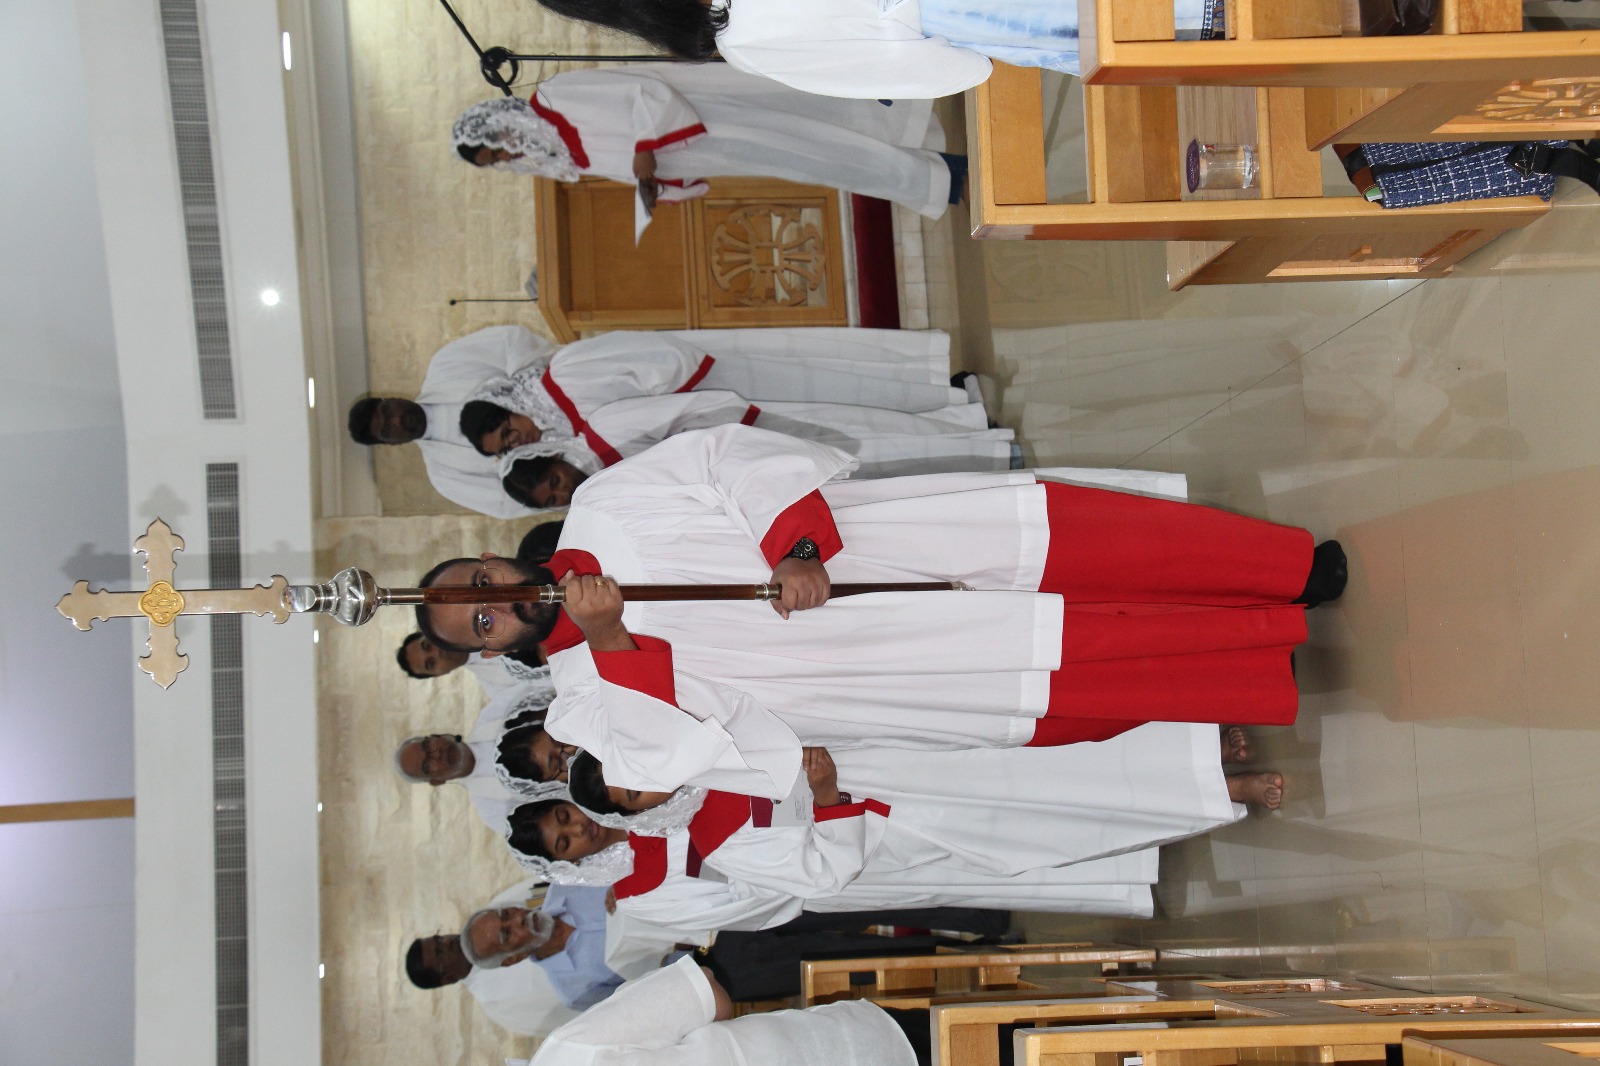 49th Parish Day Service